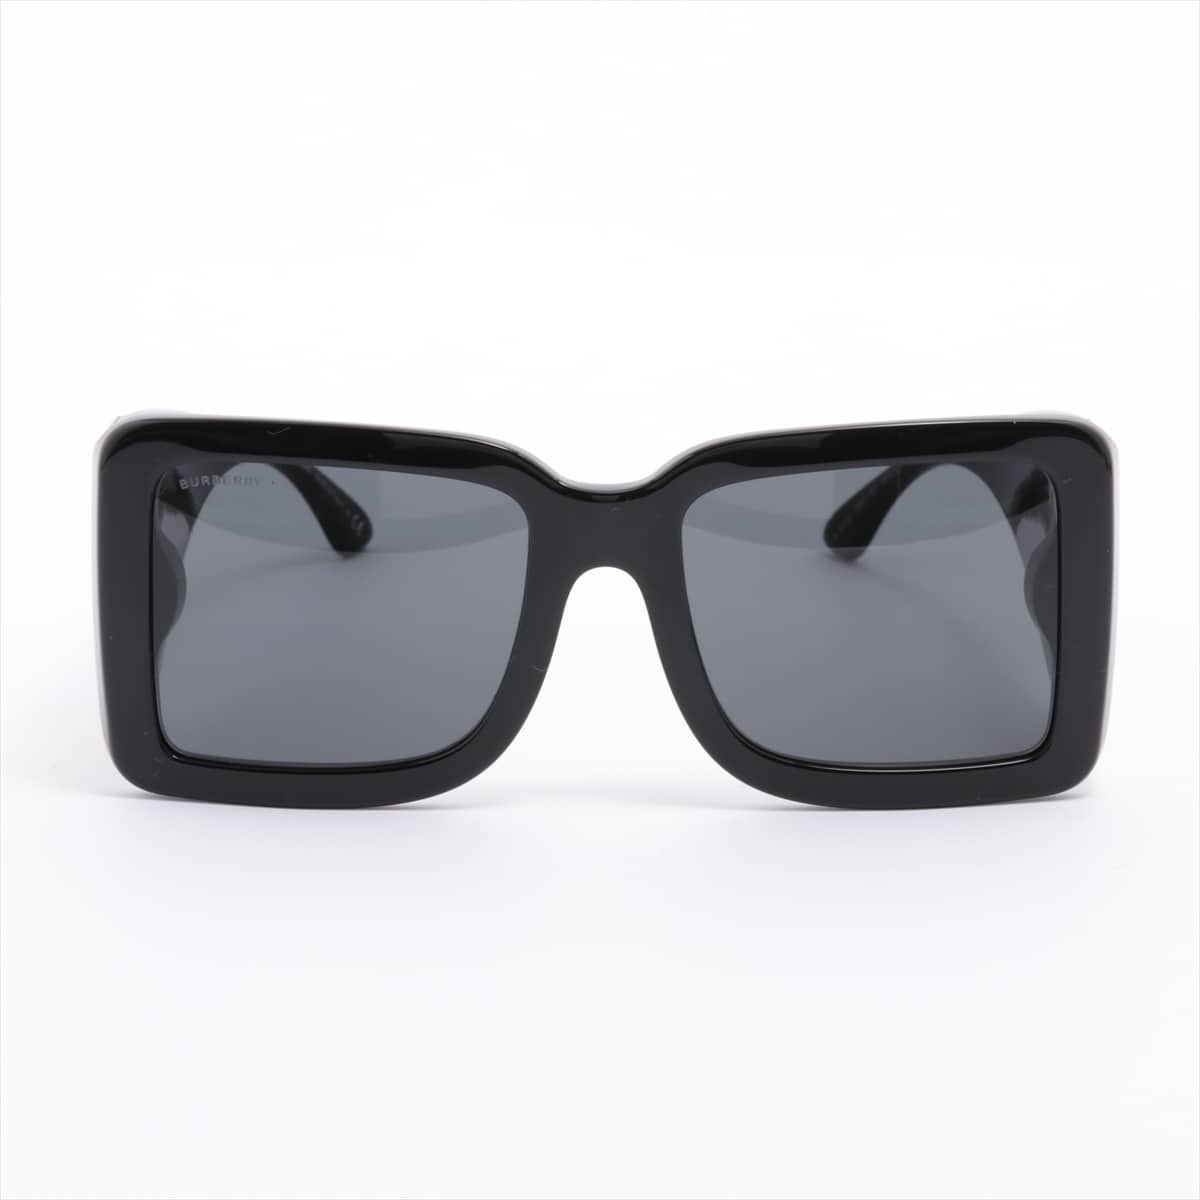 Burberry B 4312 B motif Square frame Sunglasses GP x plastic Black×Gold